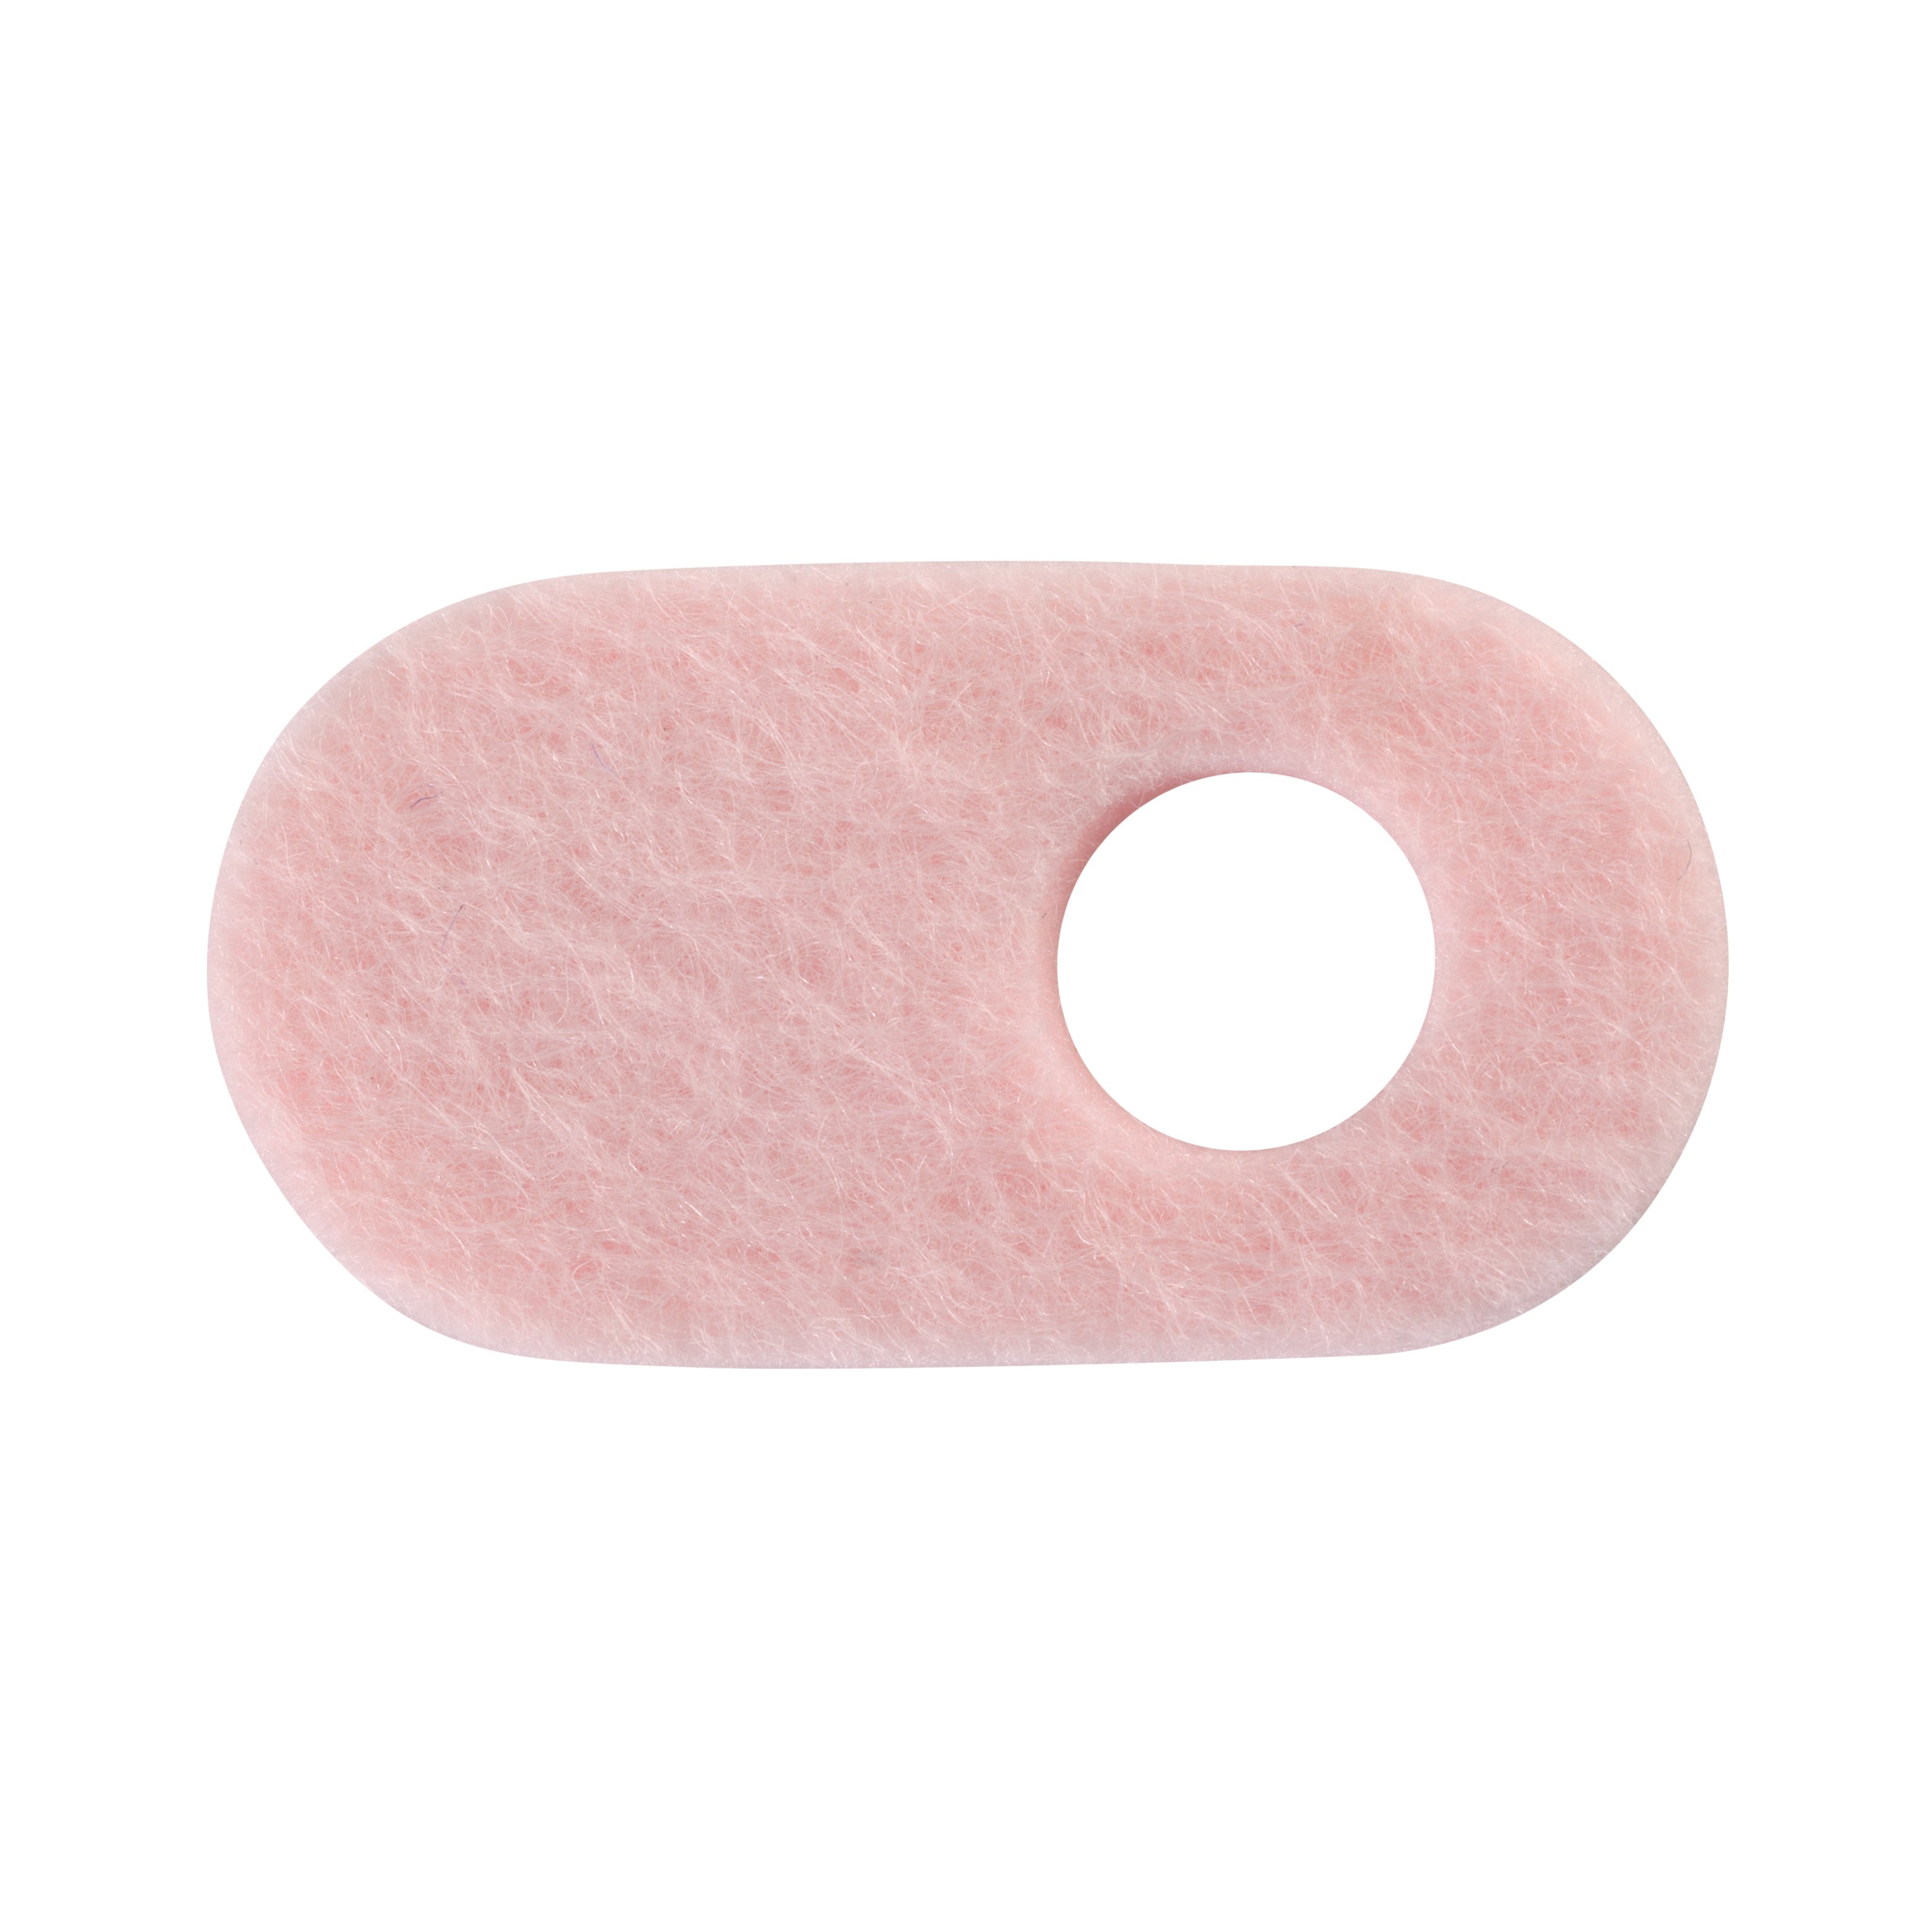 Stein's 1/8" Pink Adhesive Felt C-1 Corn Pad, 500/pk AM-765-1040-0000